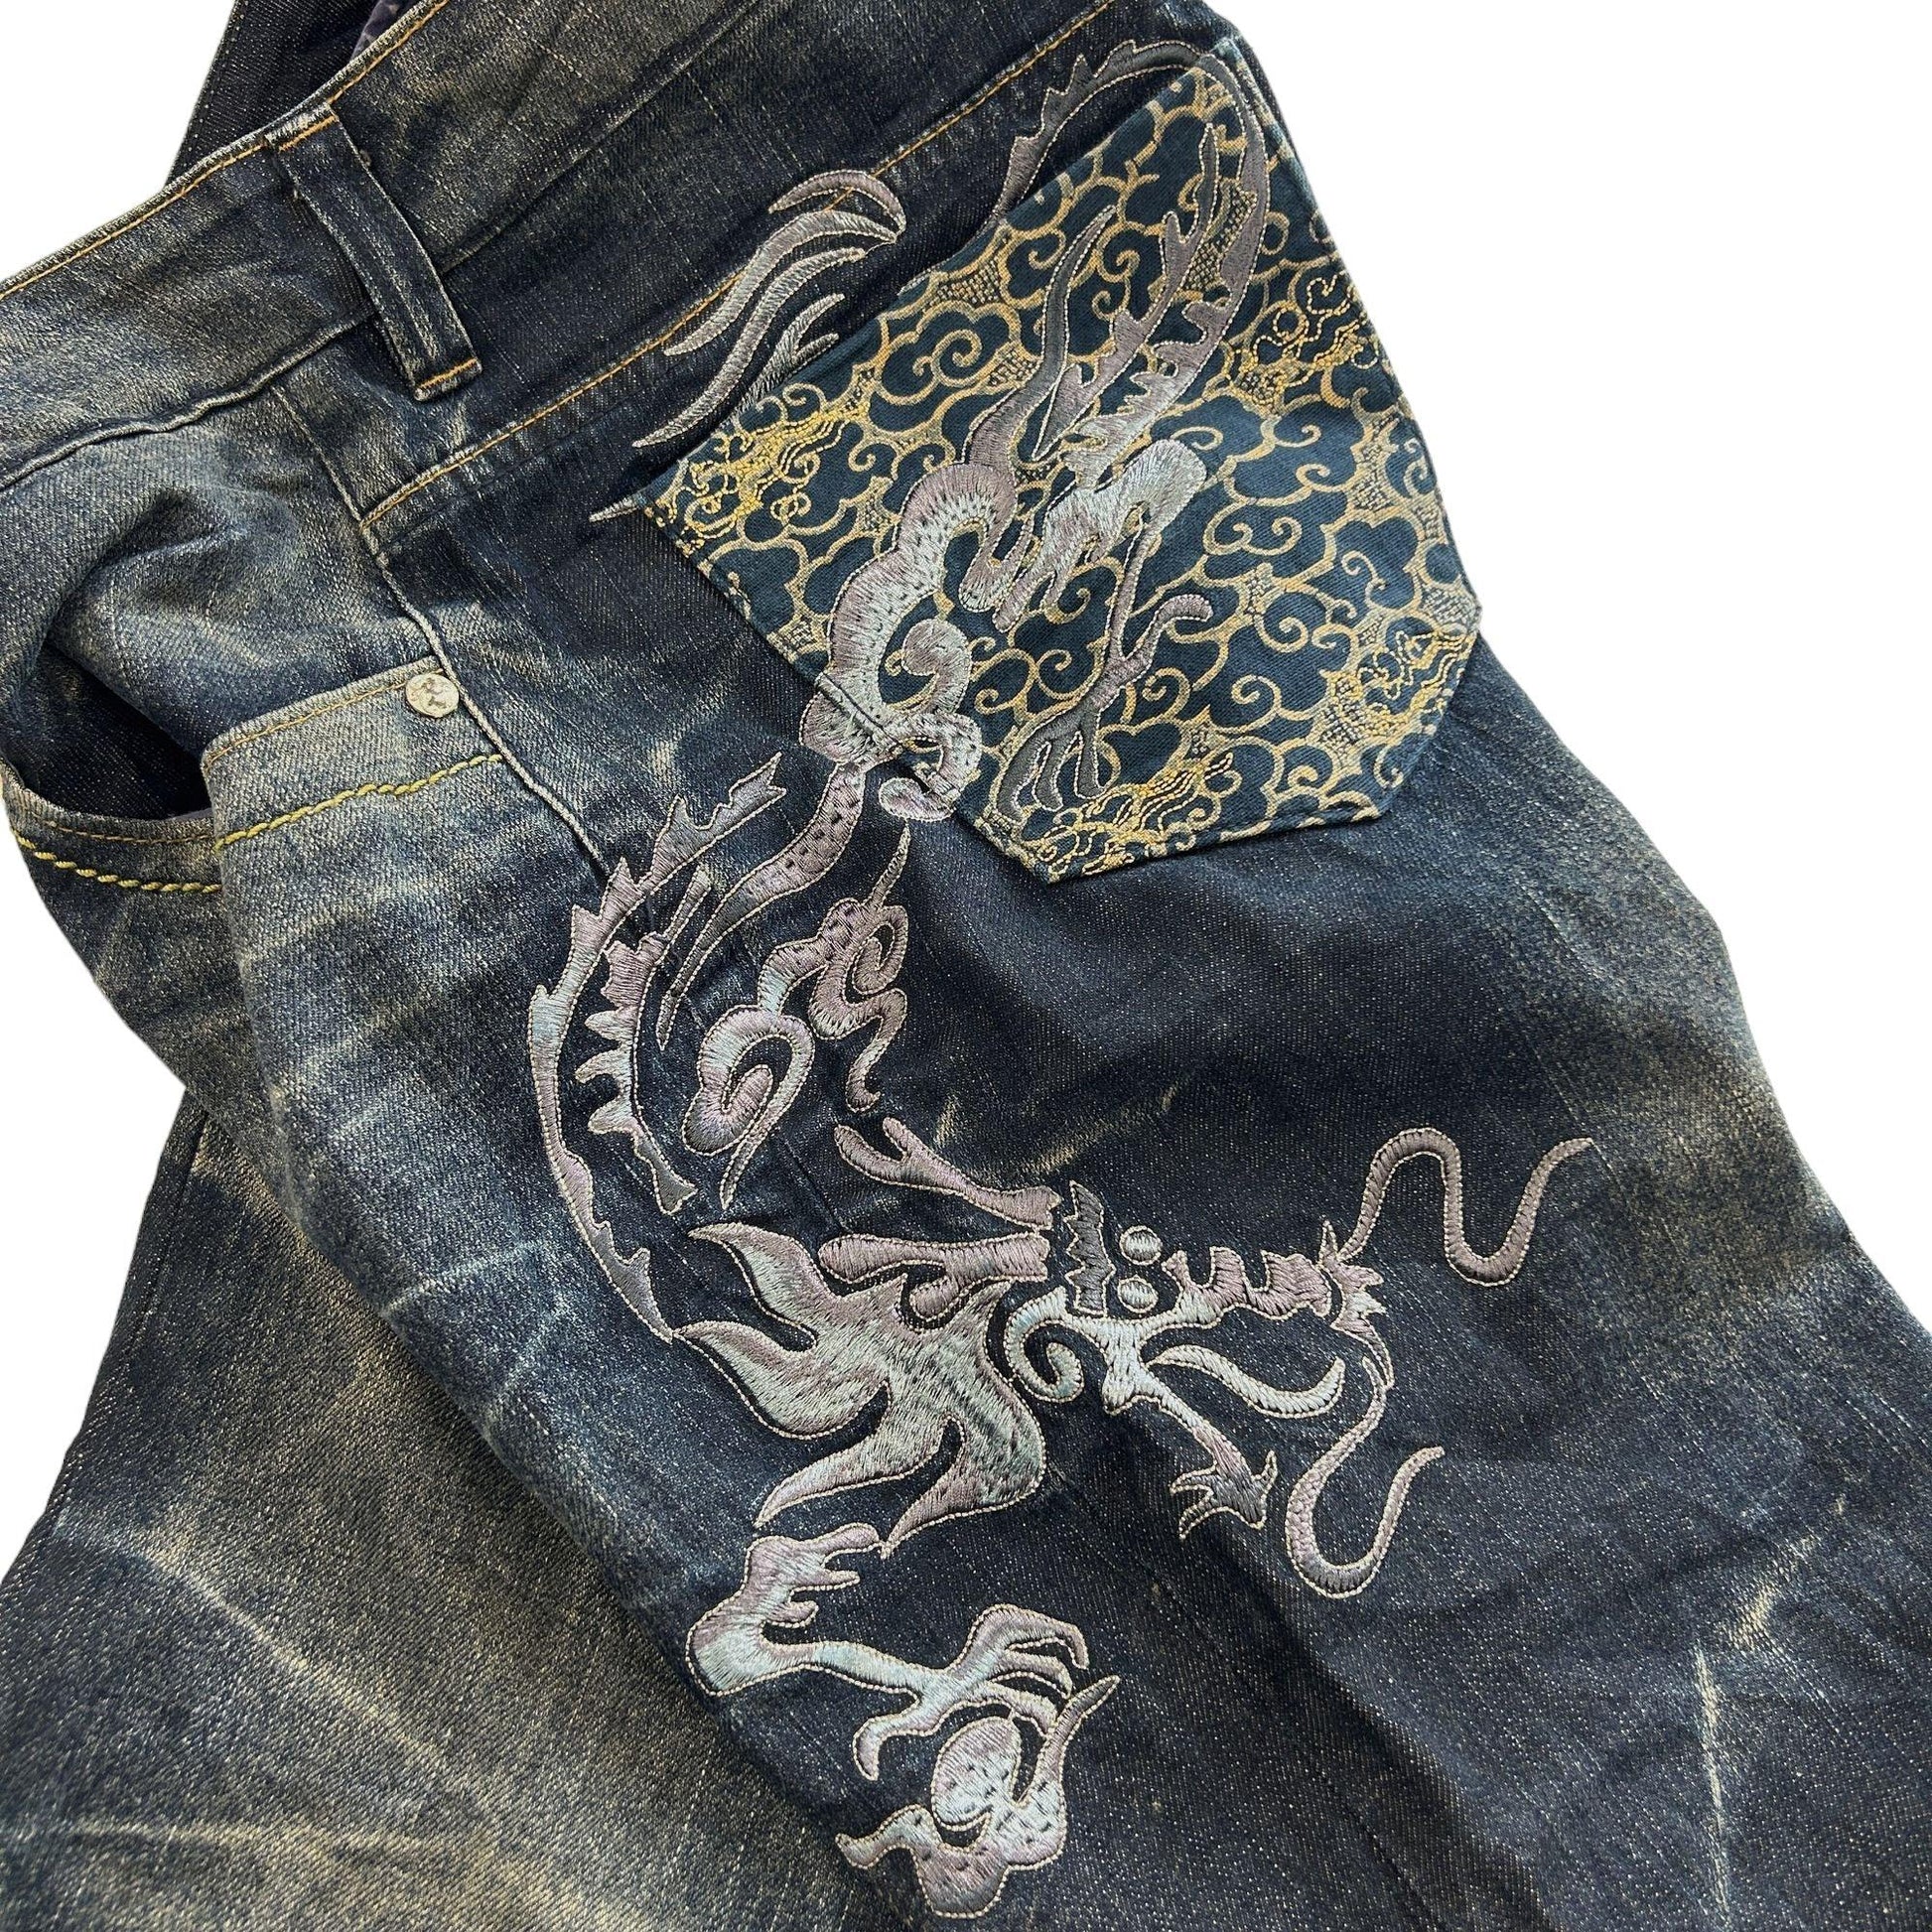 Vintage Dragon Big Train Japanese Denim Jeans Size W31 - Known Source